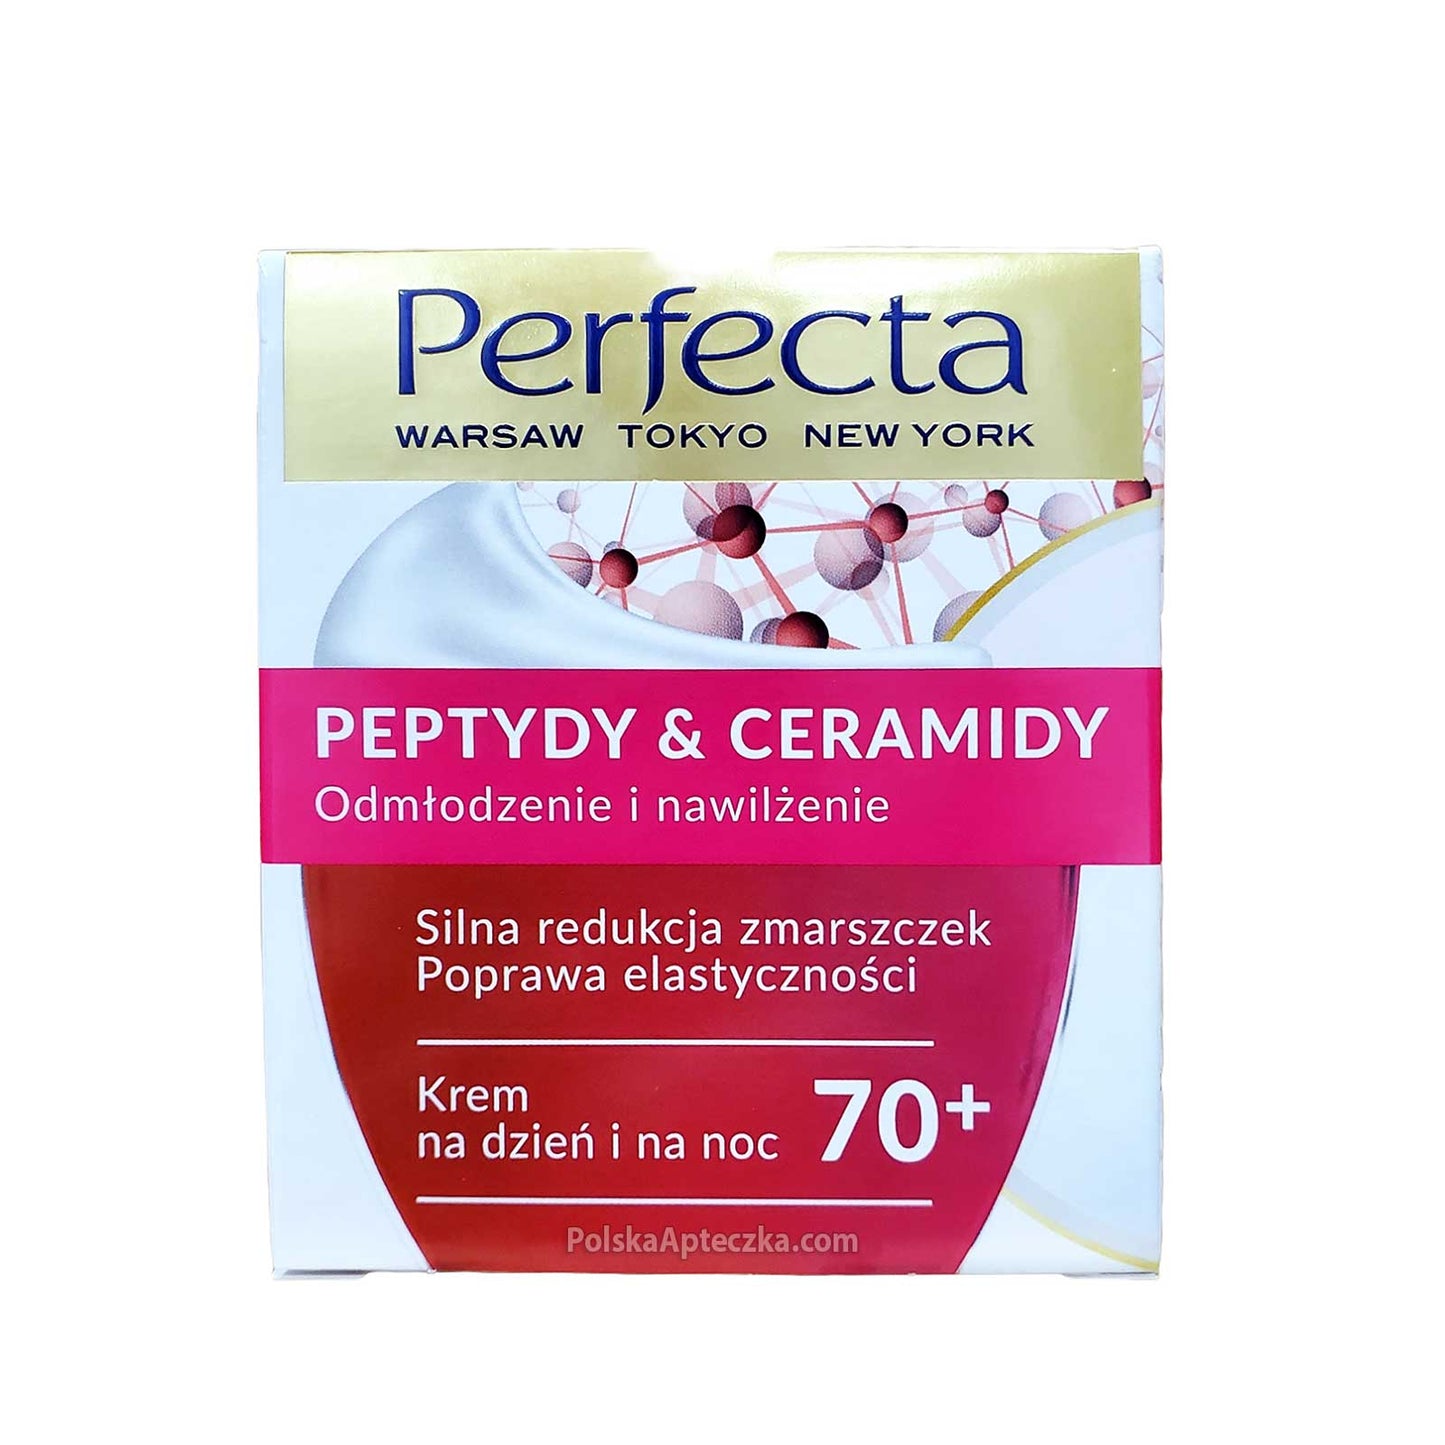 Perfecta, Peptydy & Ceramidy 70+ krem na dzien i noc, 50ml